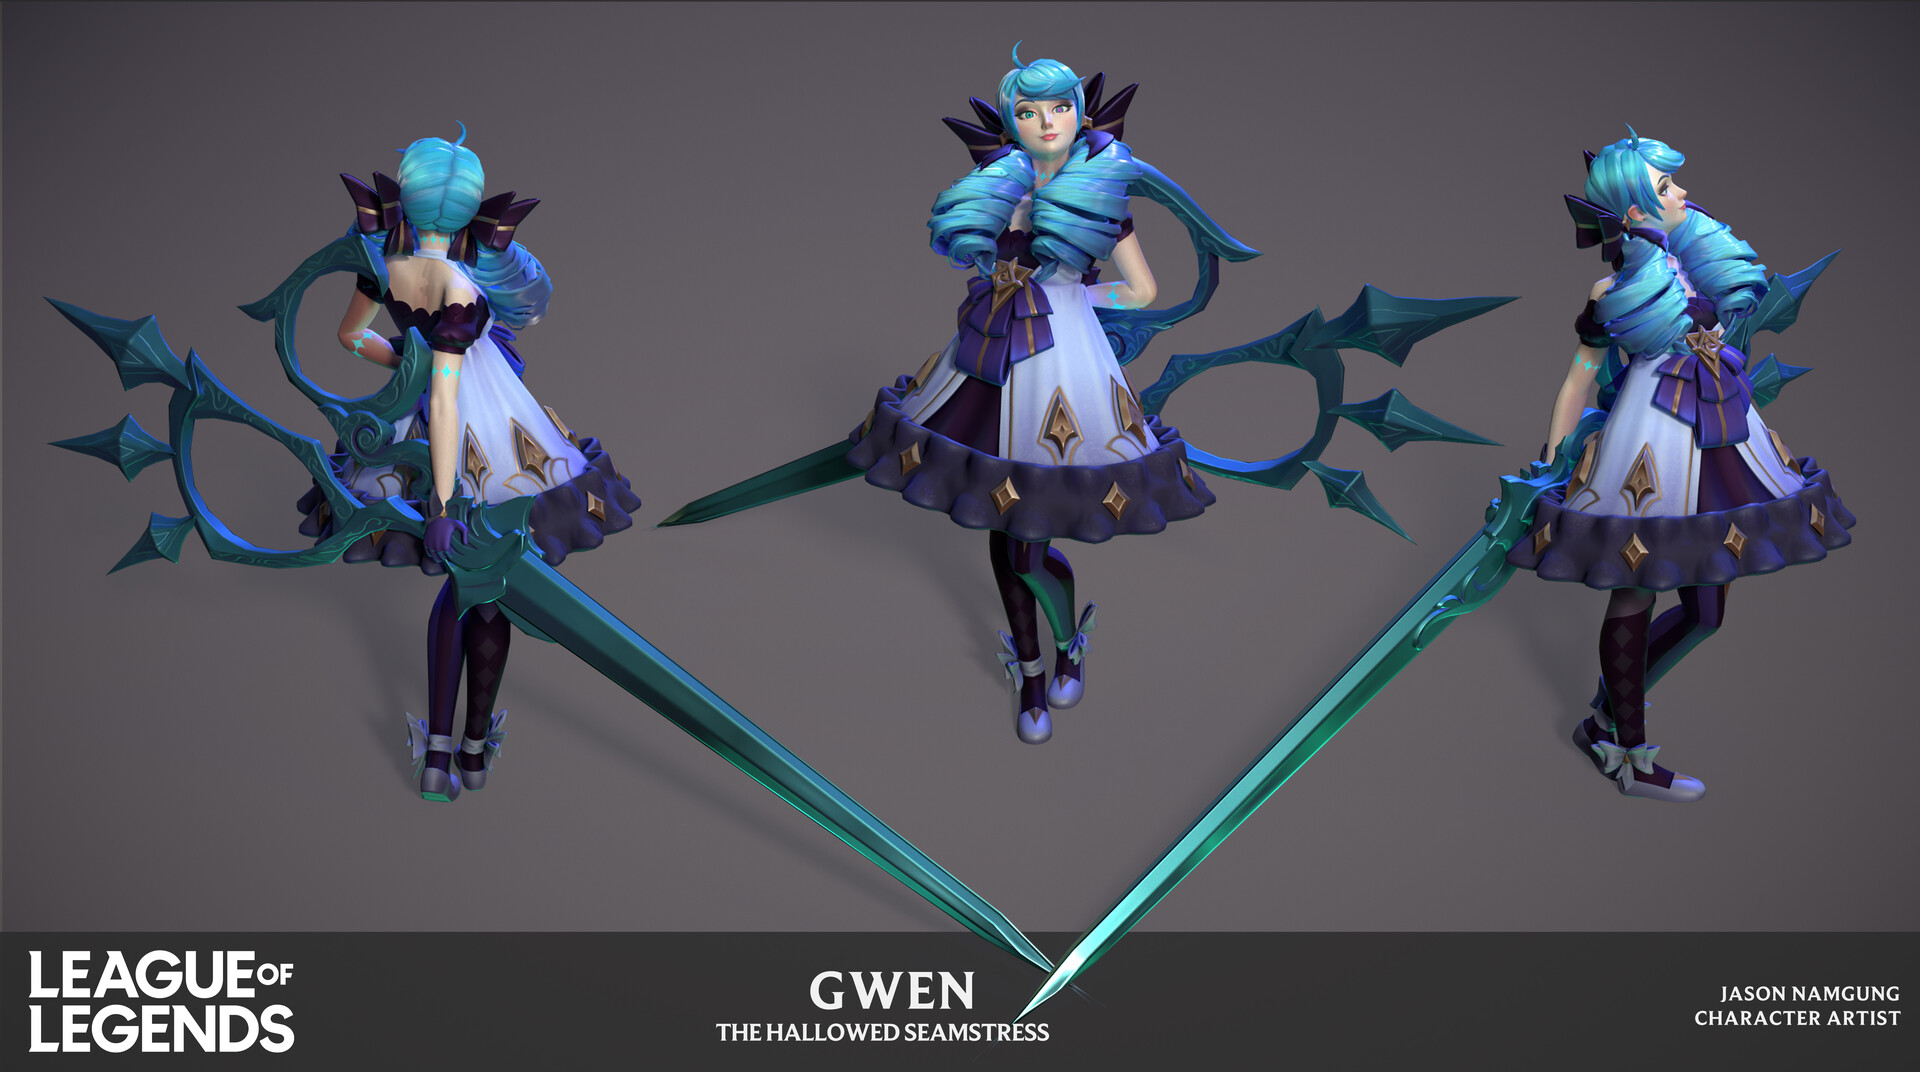 Gwen the Hallowed Seamstress